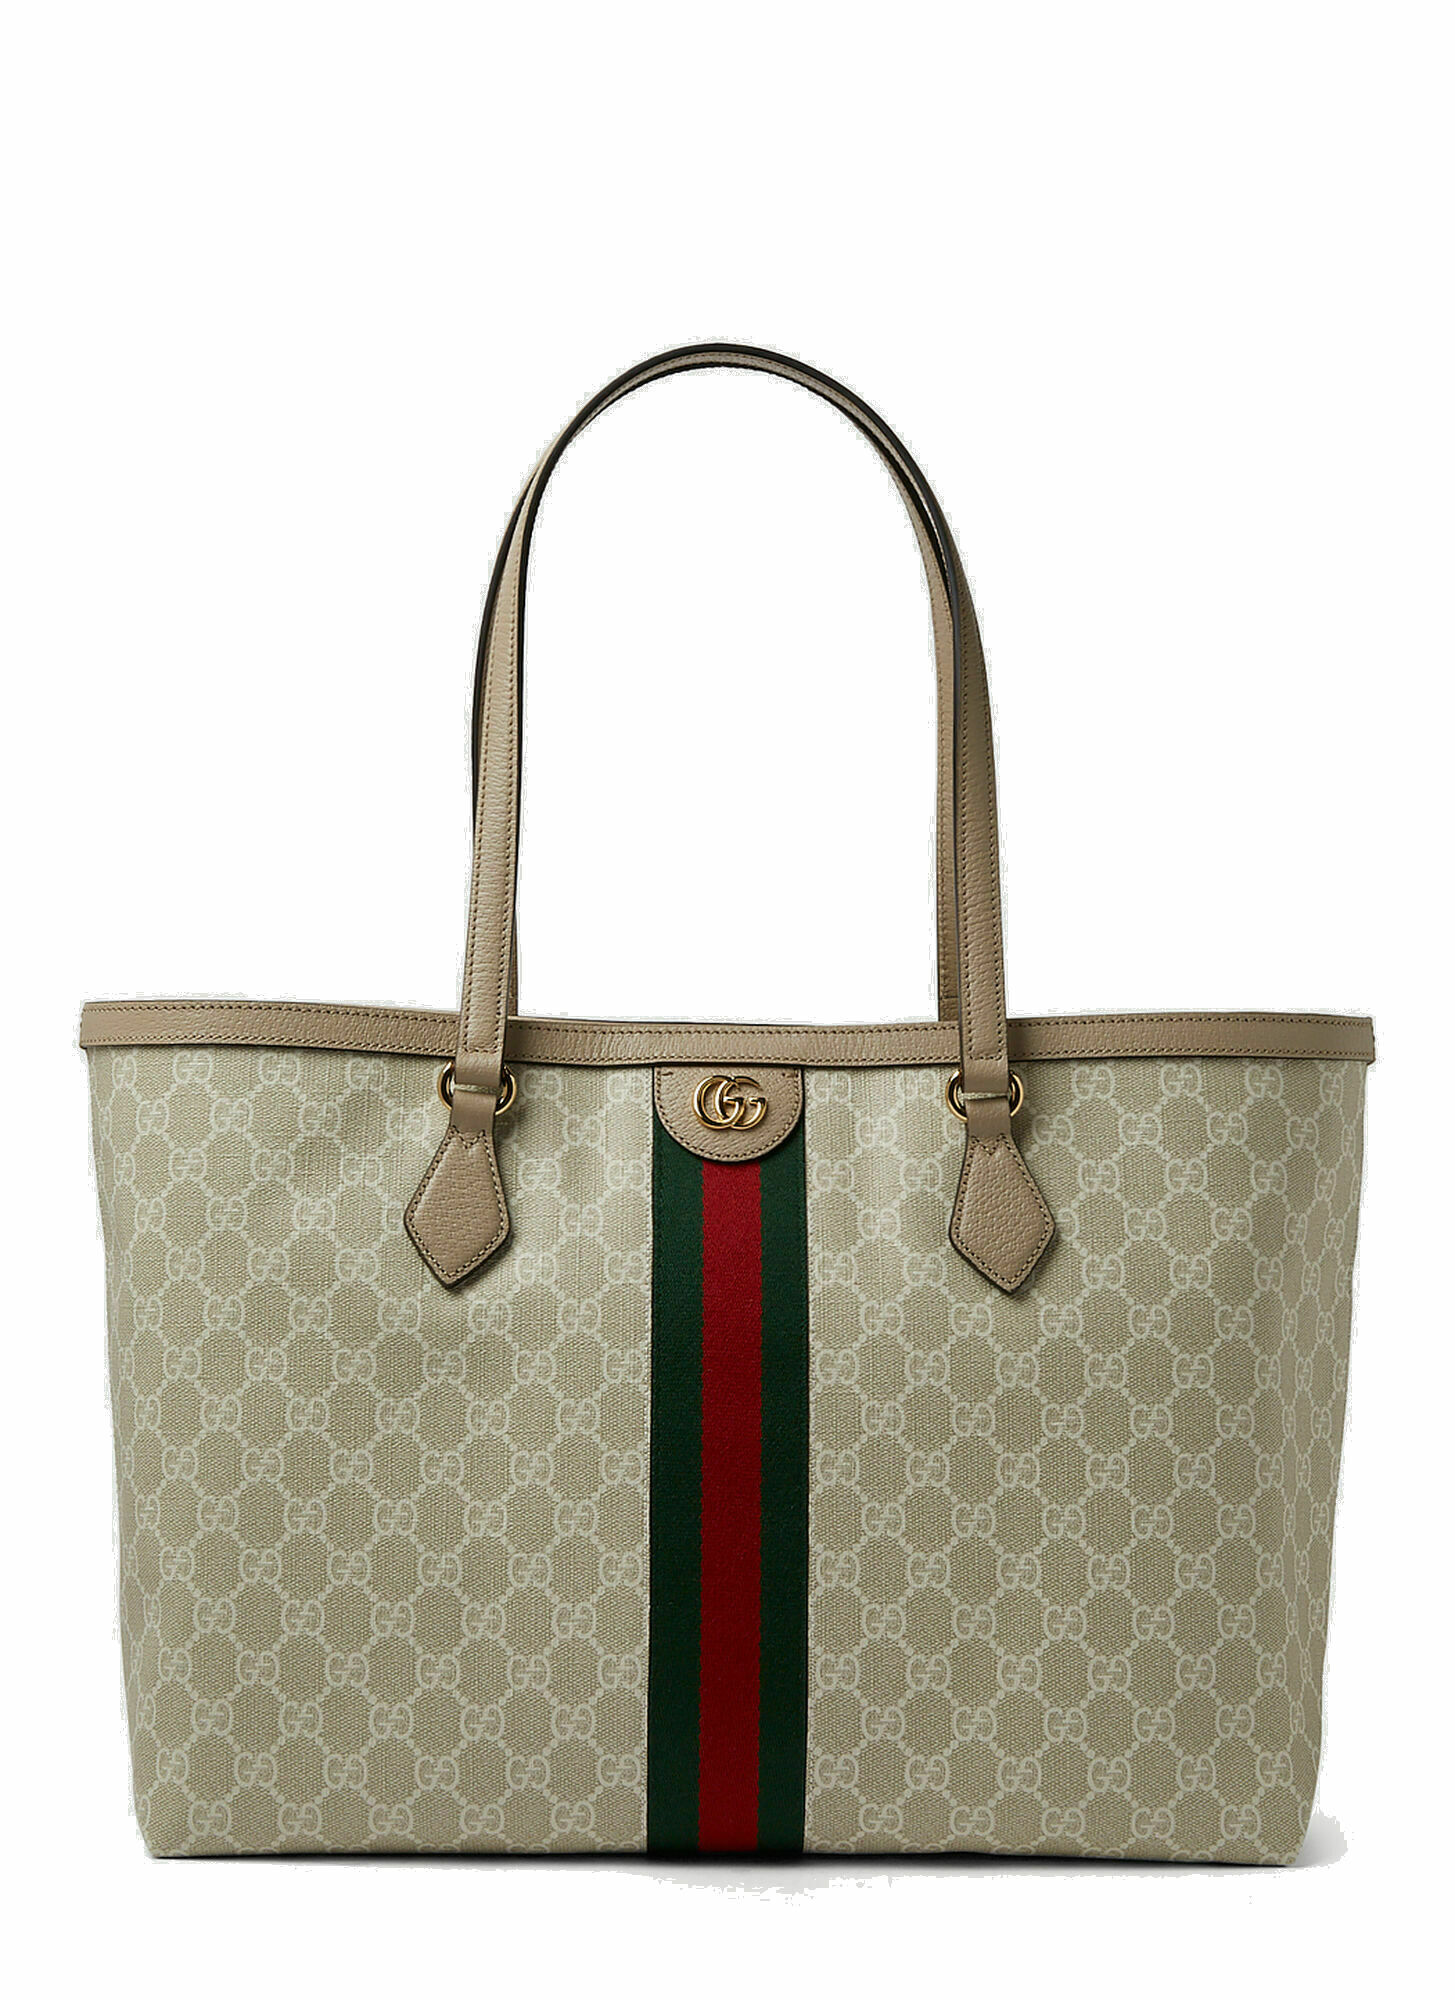 Ophidia Tote Bag in Cream Gucci